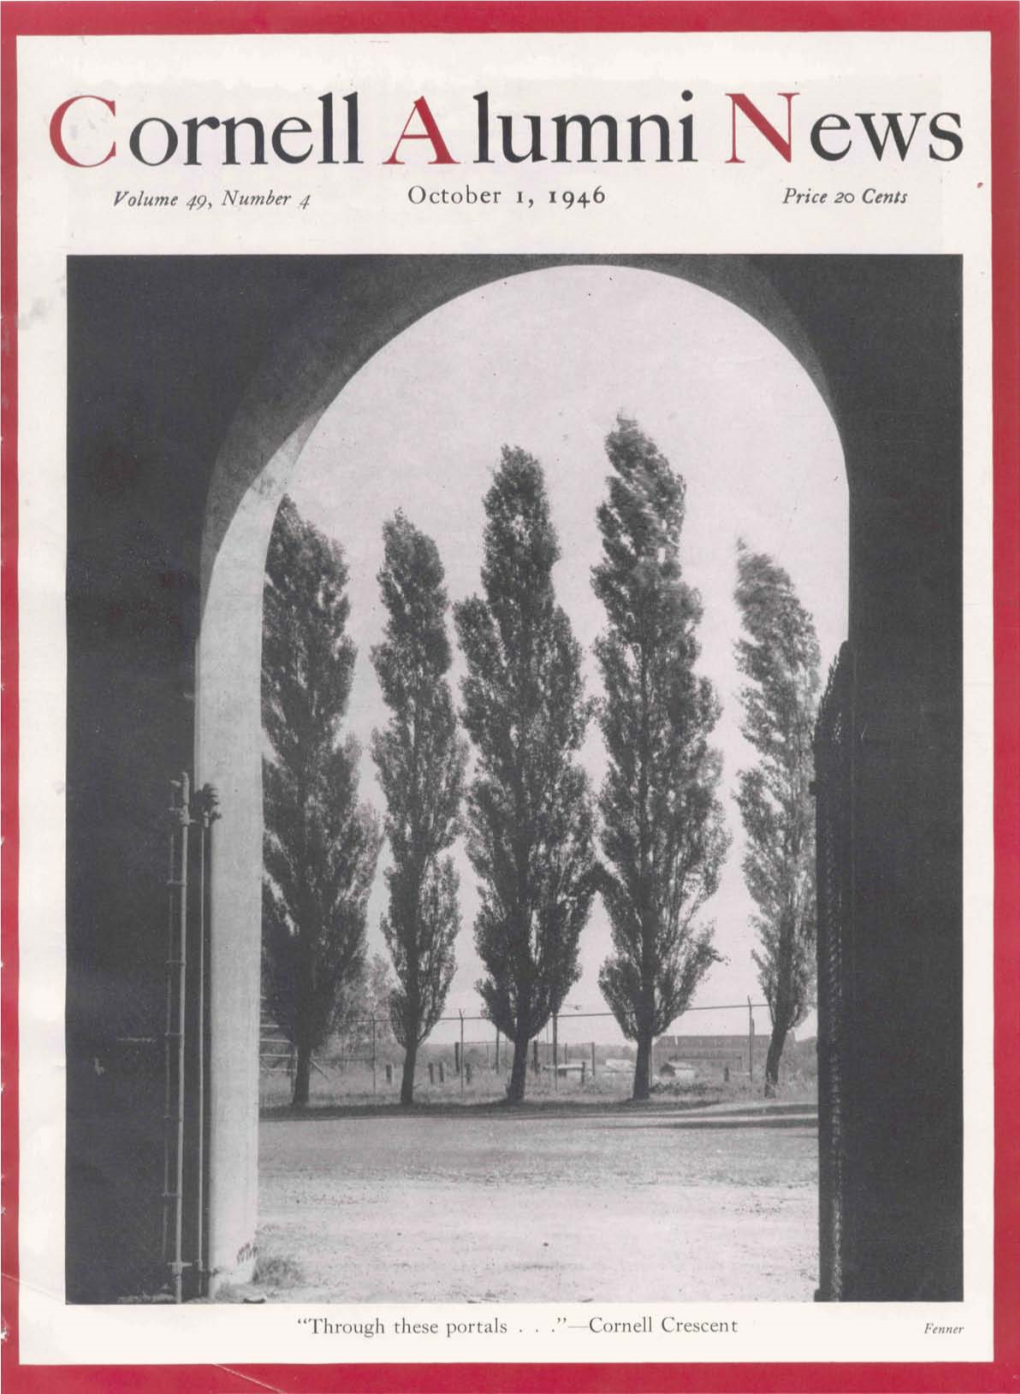 C Ornell Alumni News Volume 49, Number 4 October I, 1946 Price 20 Cents